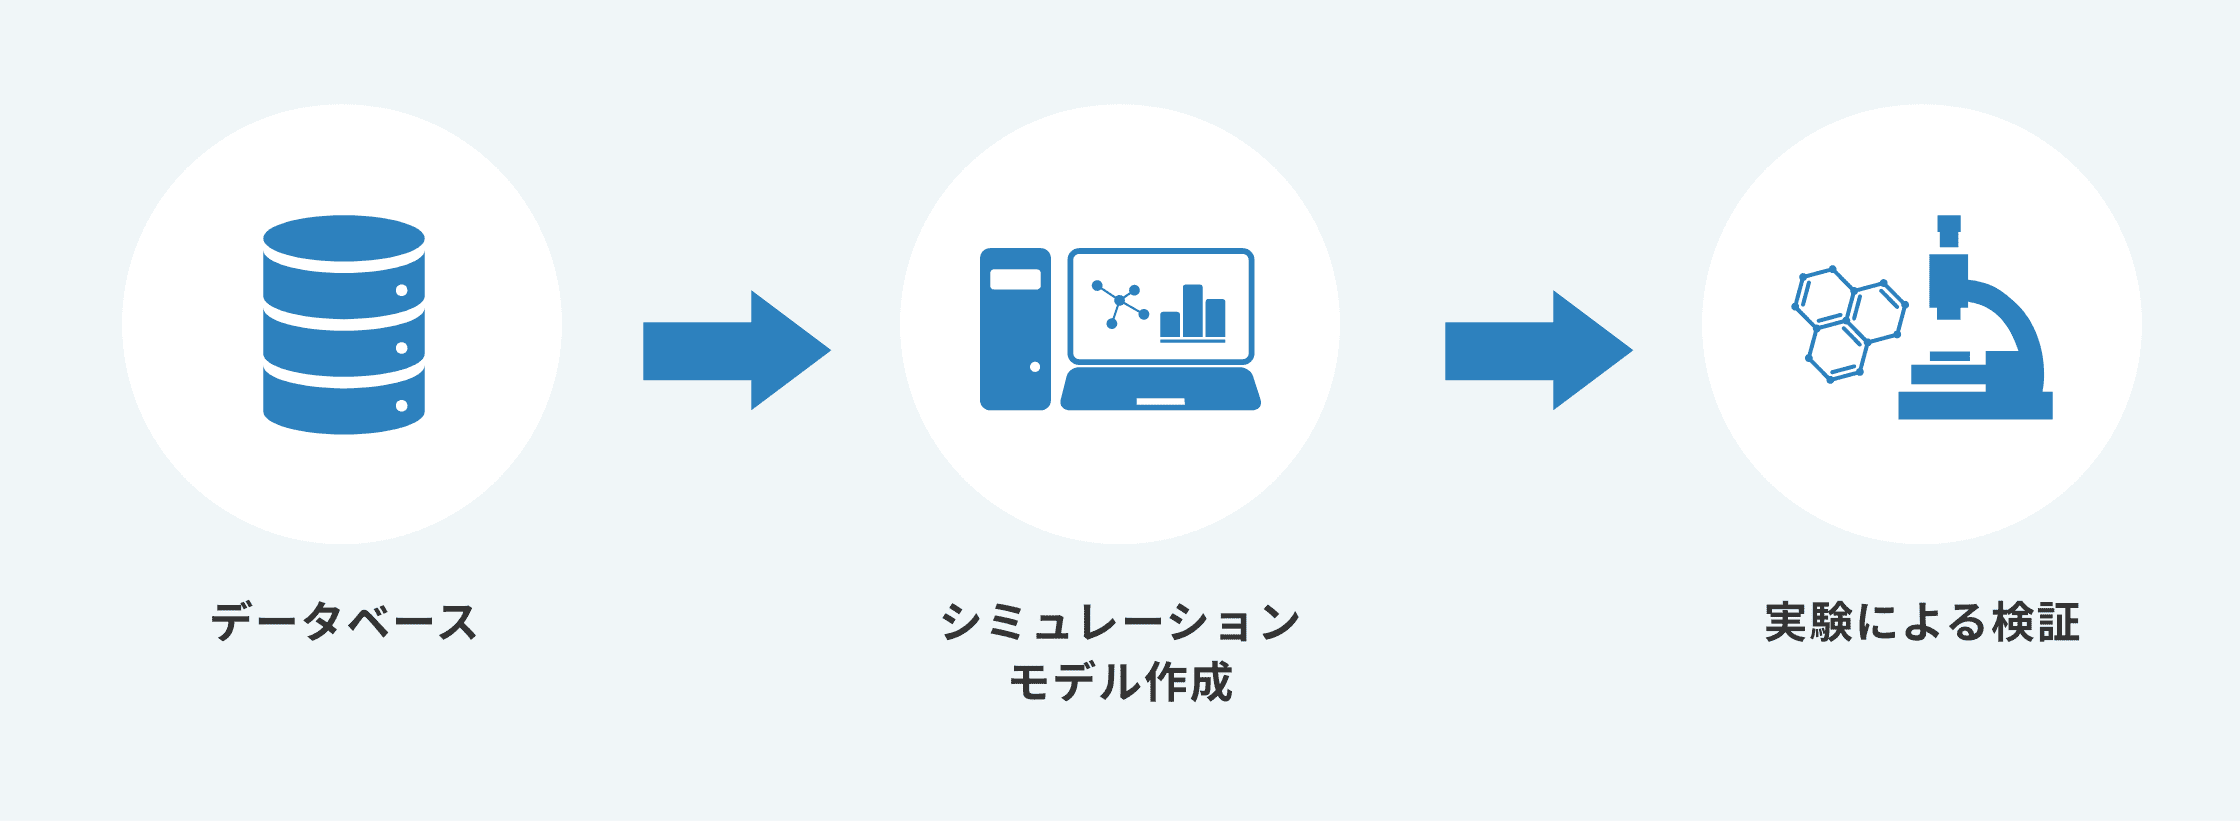 MI技術：データベース→シミュレーションモデル作成→実験による検証